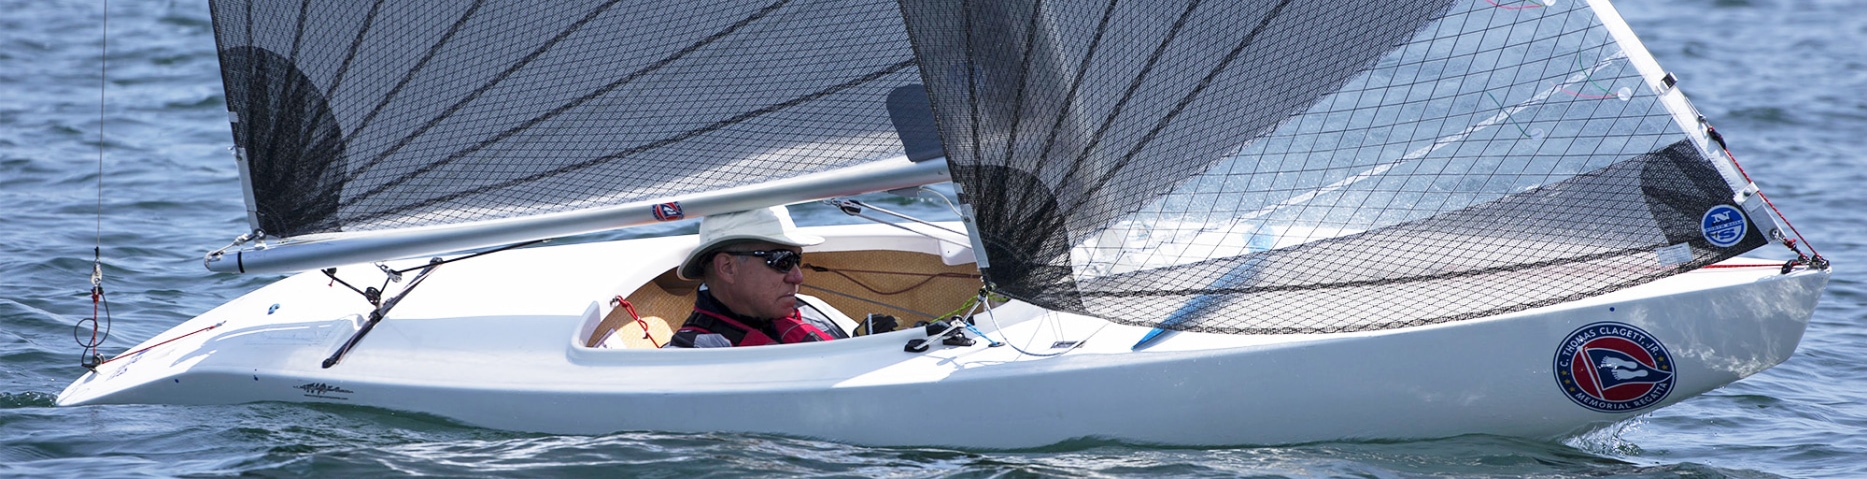 A 2.4mR sailor competes at the Clagett Regatta in Newport, Rhode Island